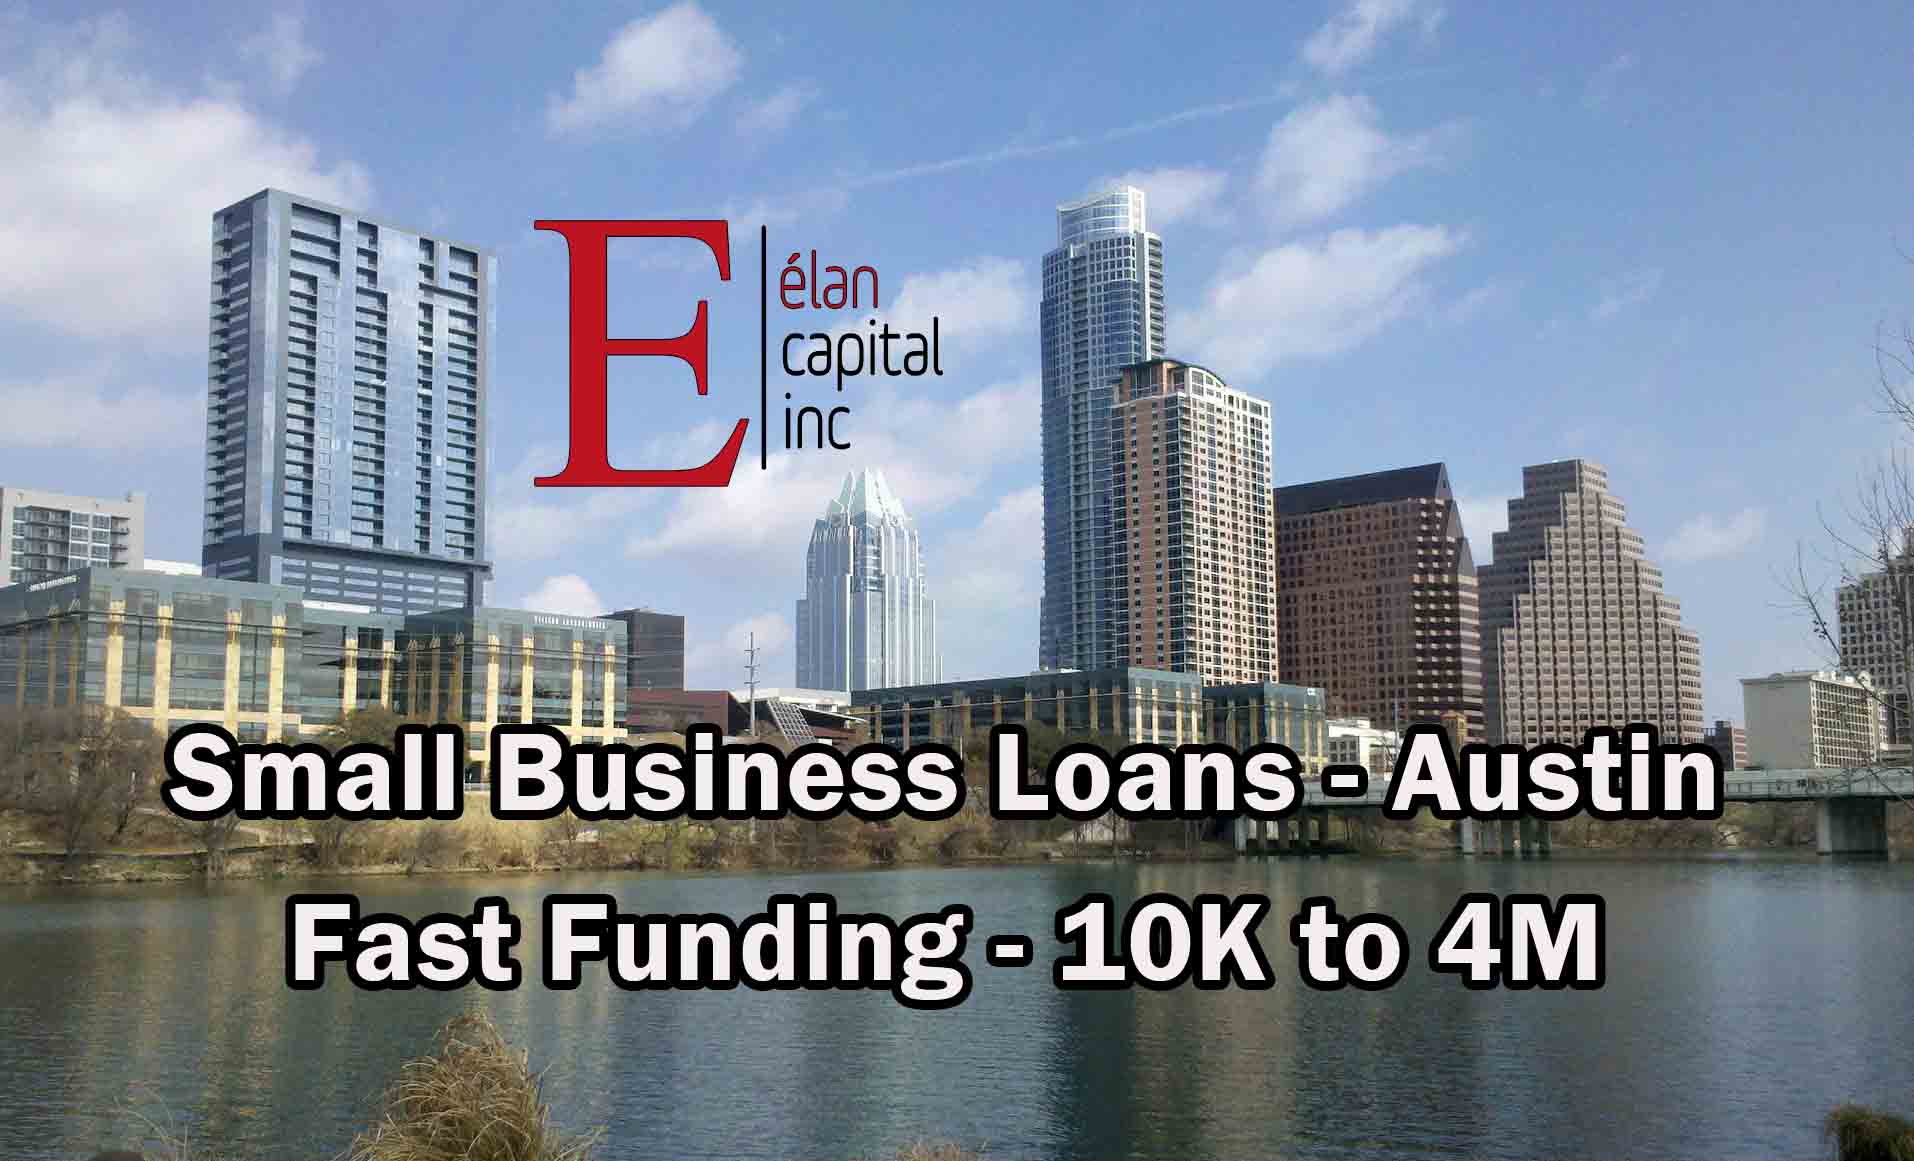 Small Business Loans - Austin